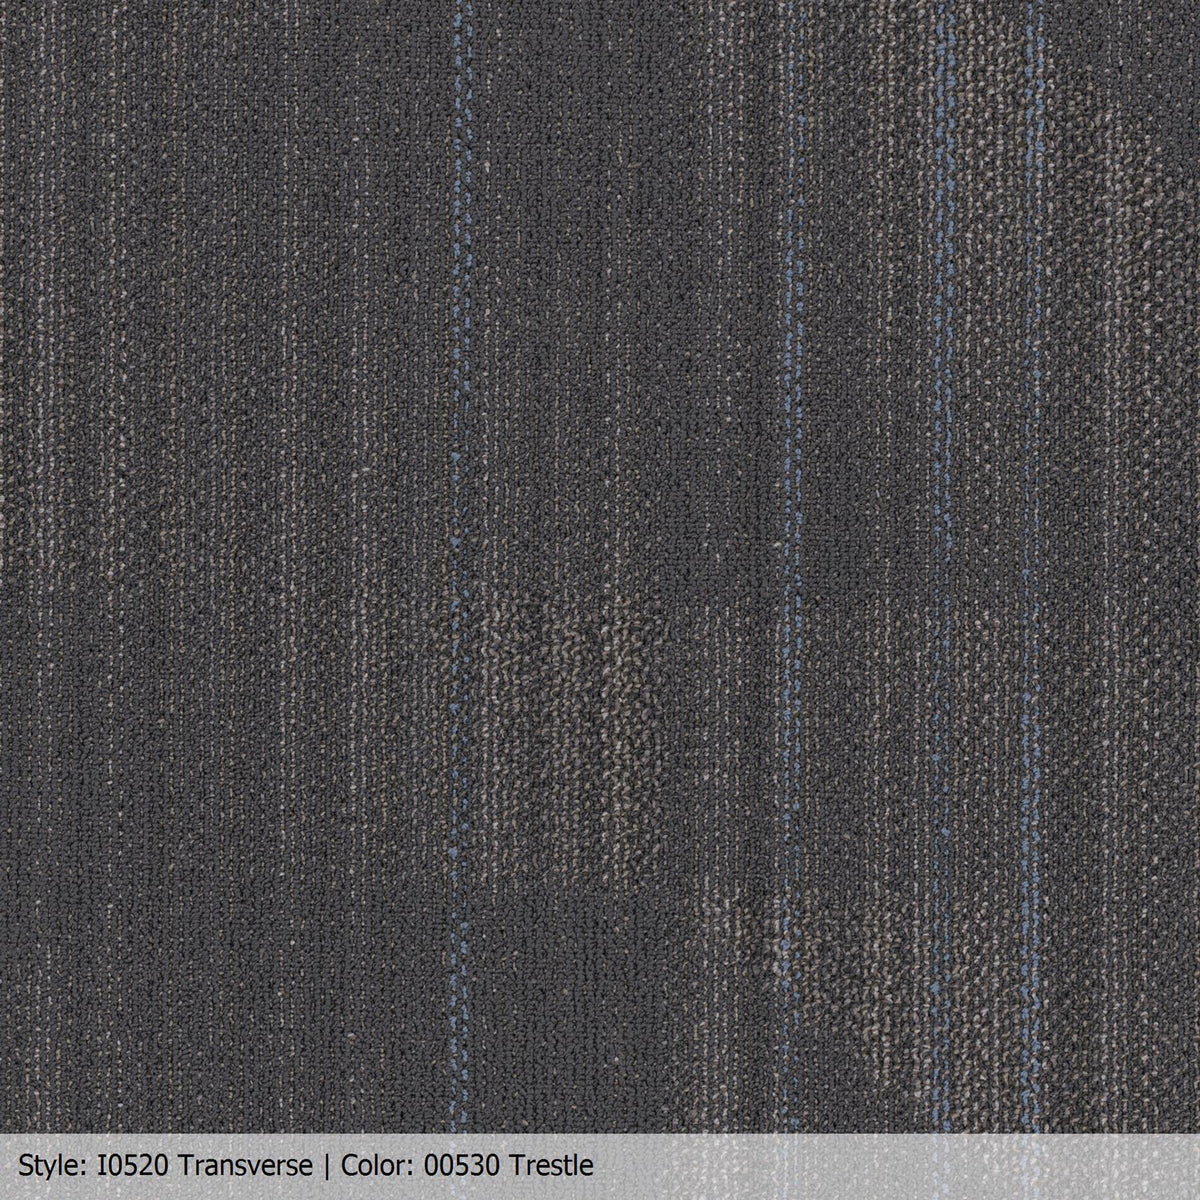 Patcraft - Infrastructure Collection - Transverse Carpet Tile - Trestle